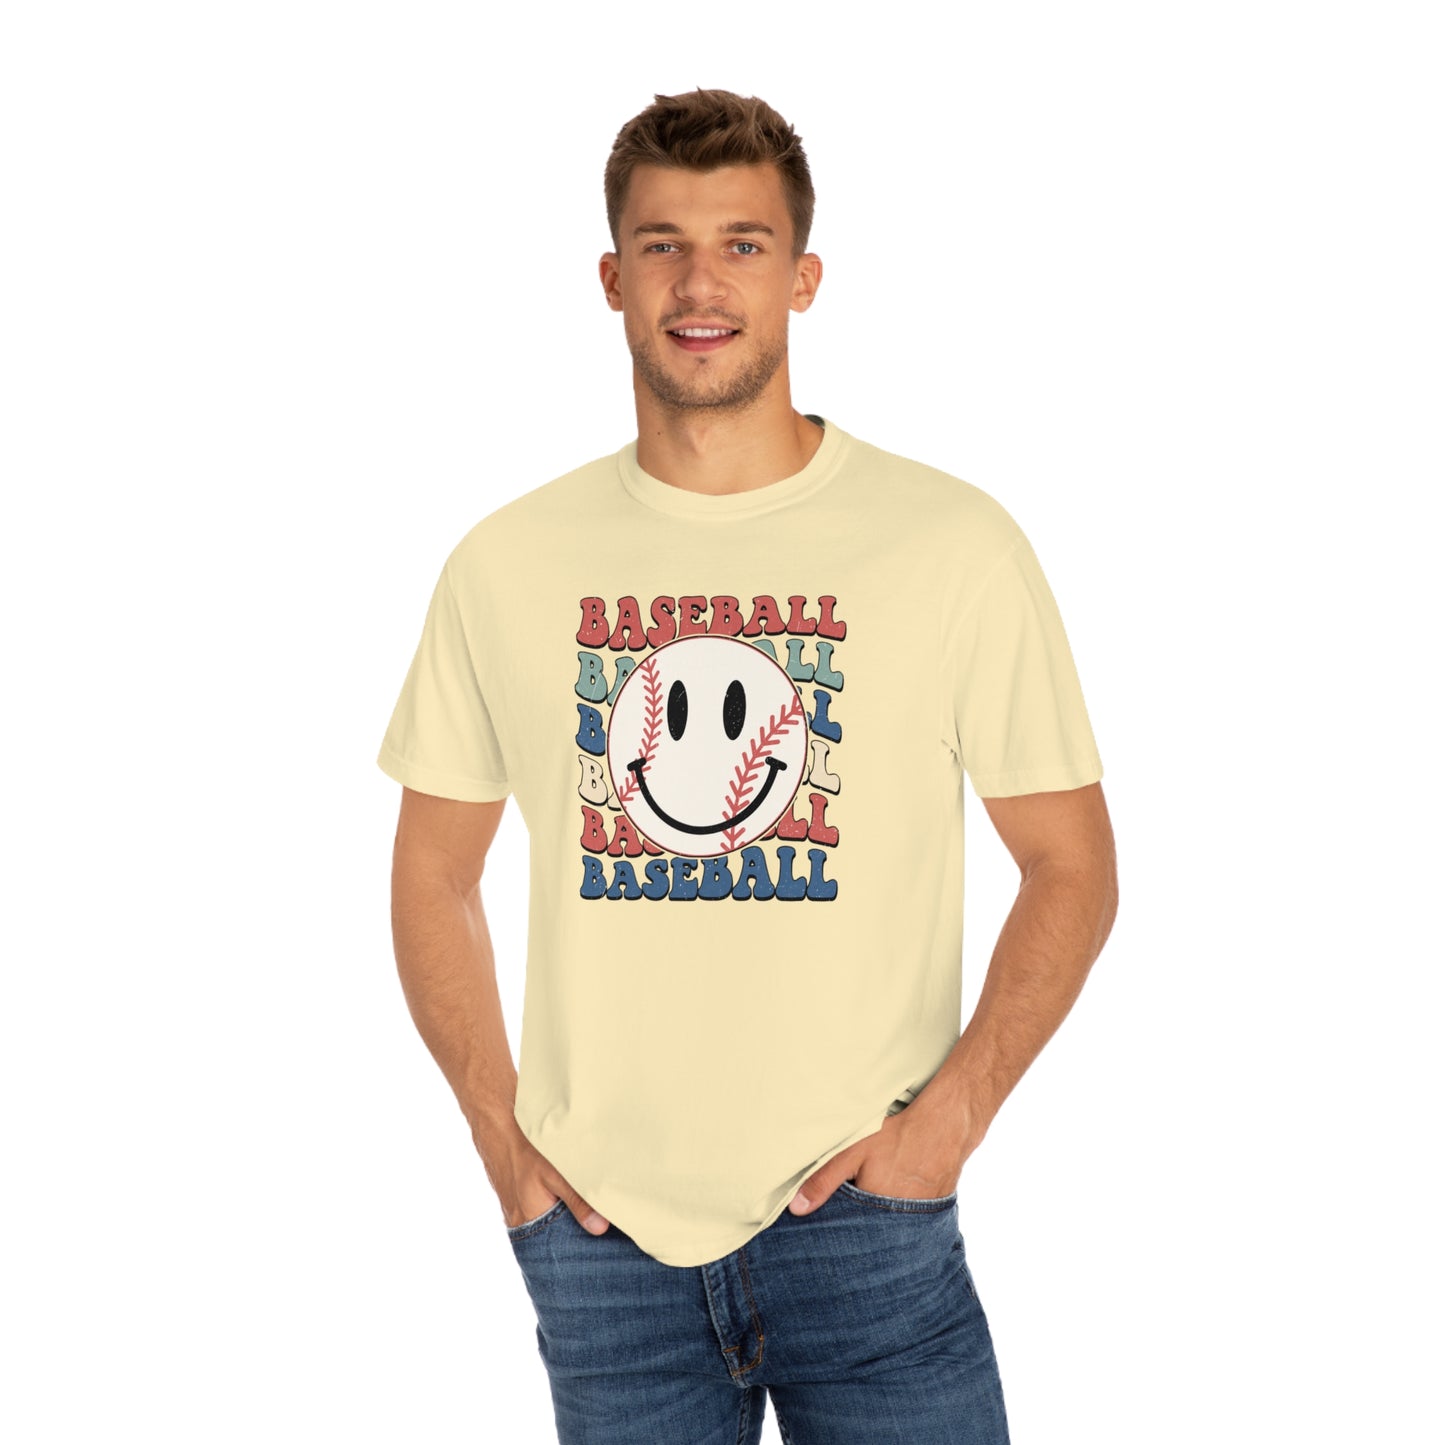 Baseball Mom T-Shirt, Baseball Game Sports Shirt, Baseball Jersey Shirt, Baseball Shirt for Women, Baseball Gift